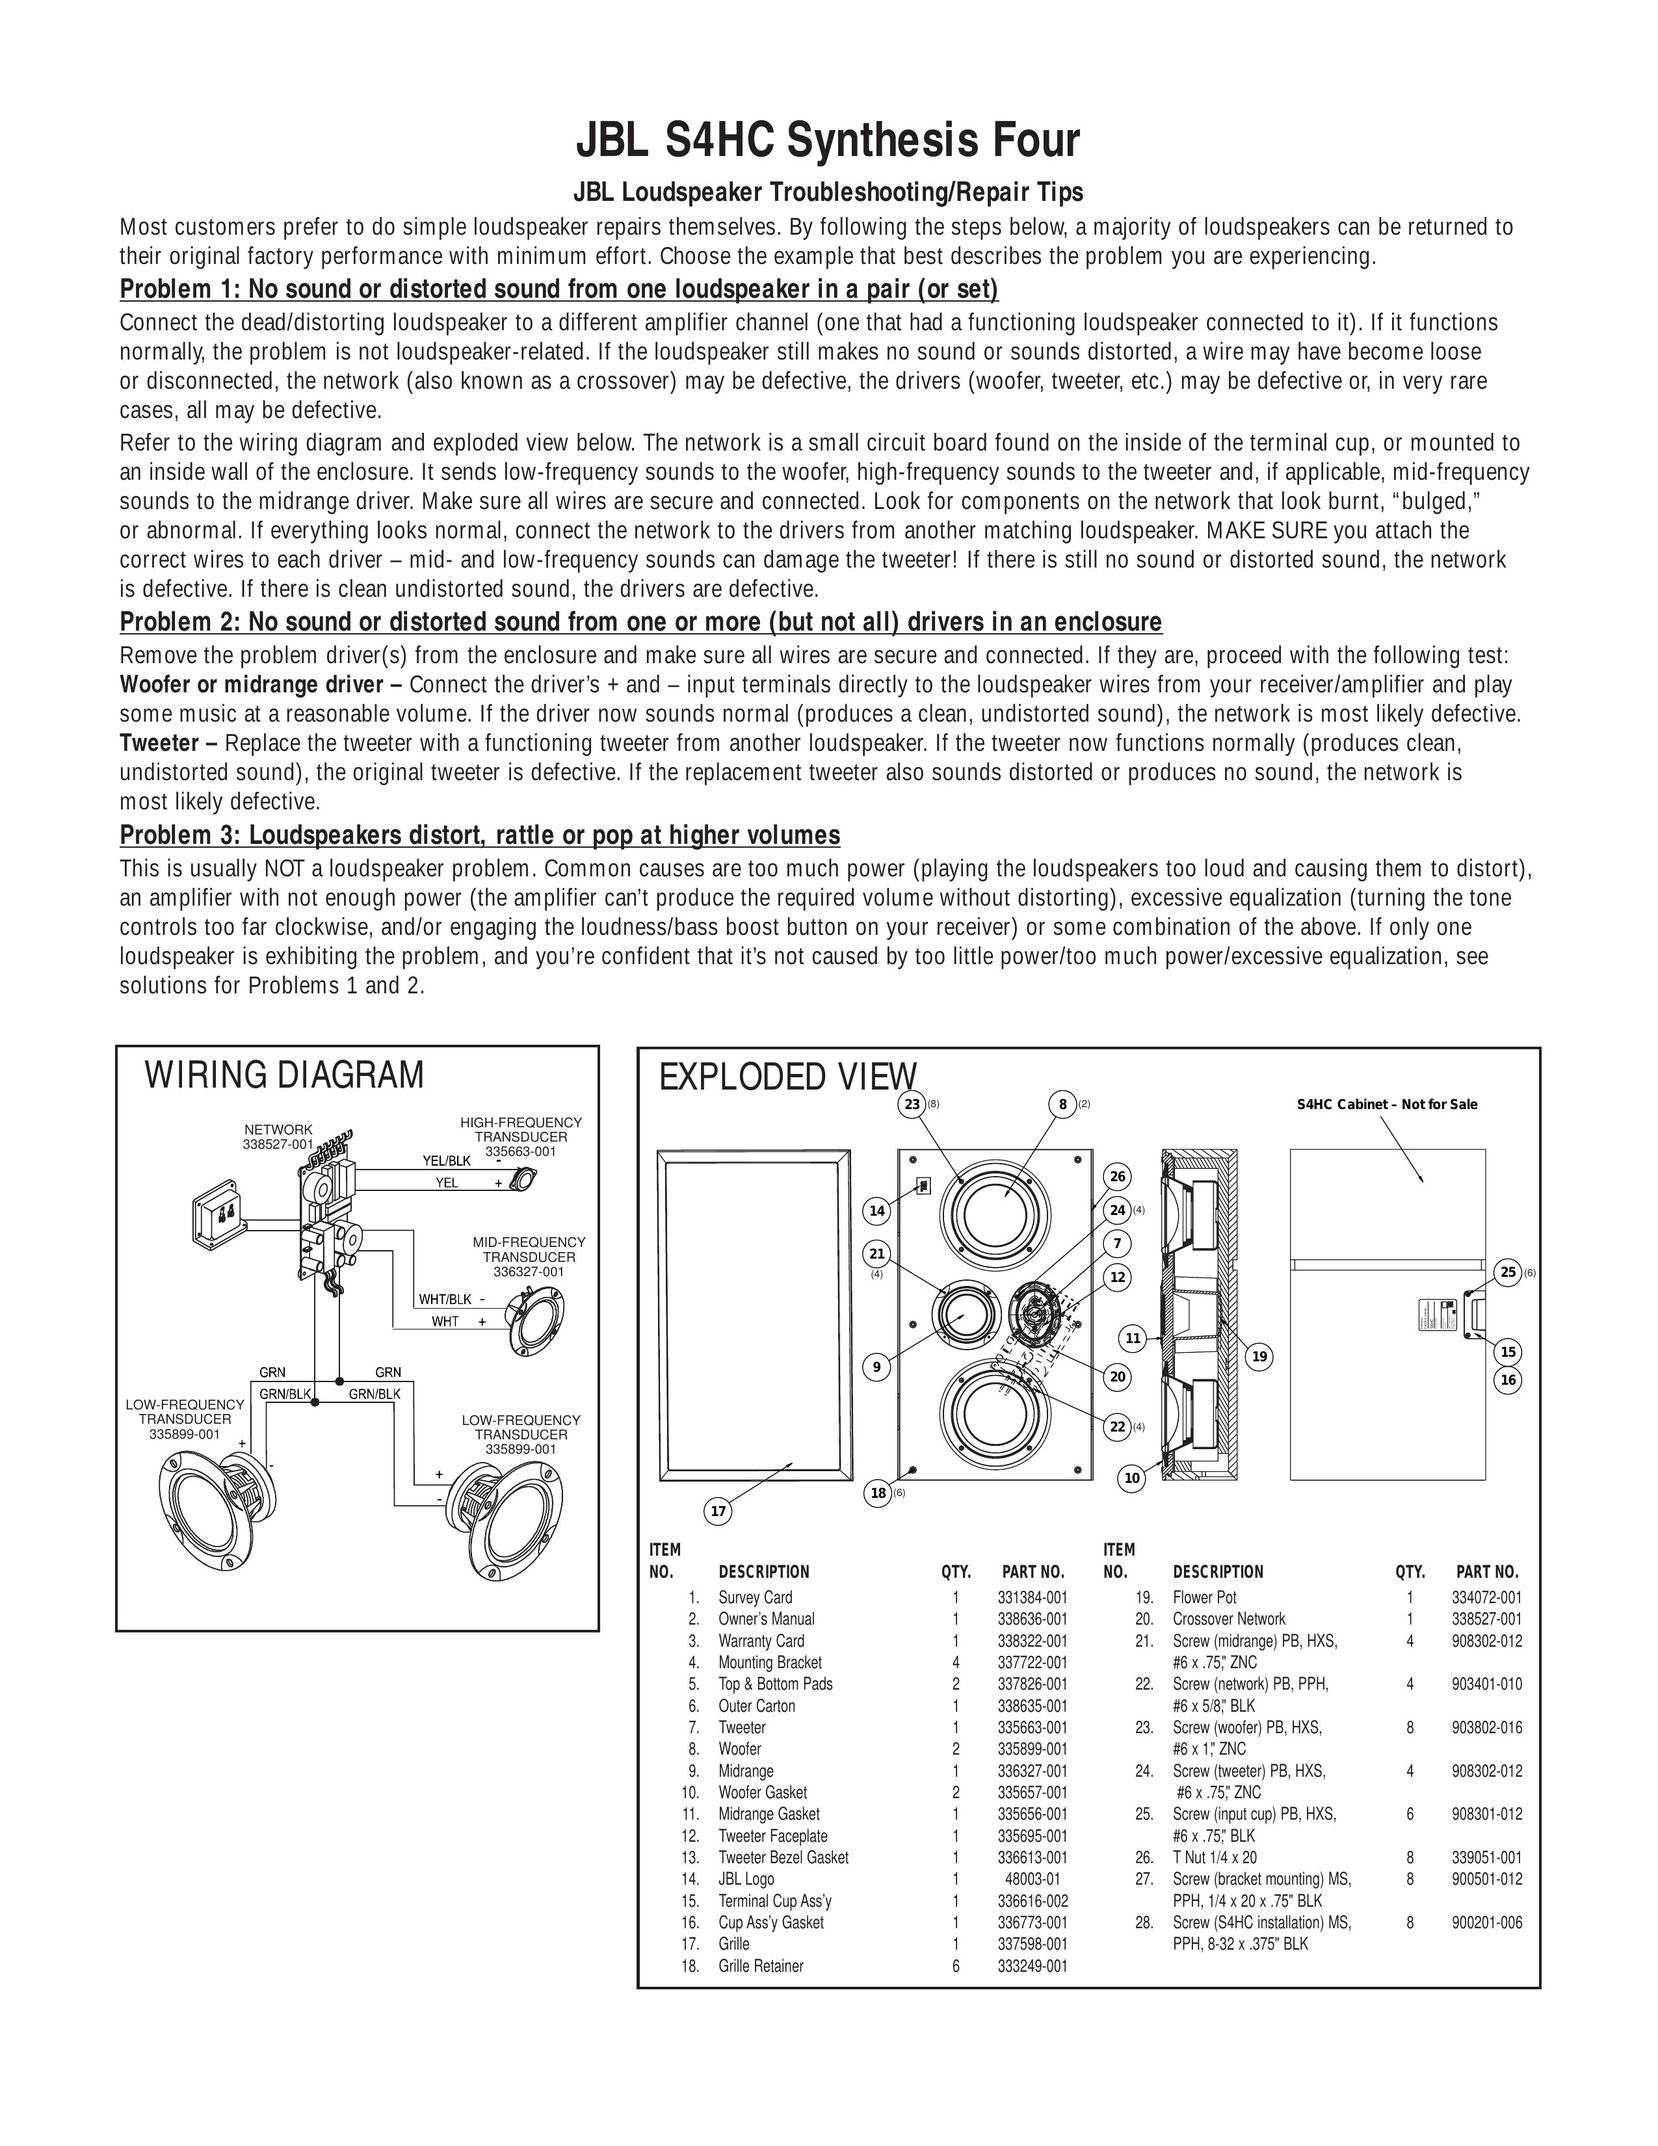 JBL S4HC Flat Panel Television User Manual